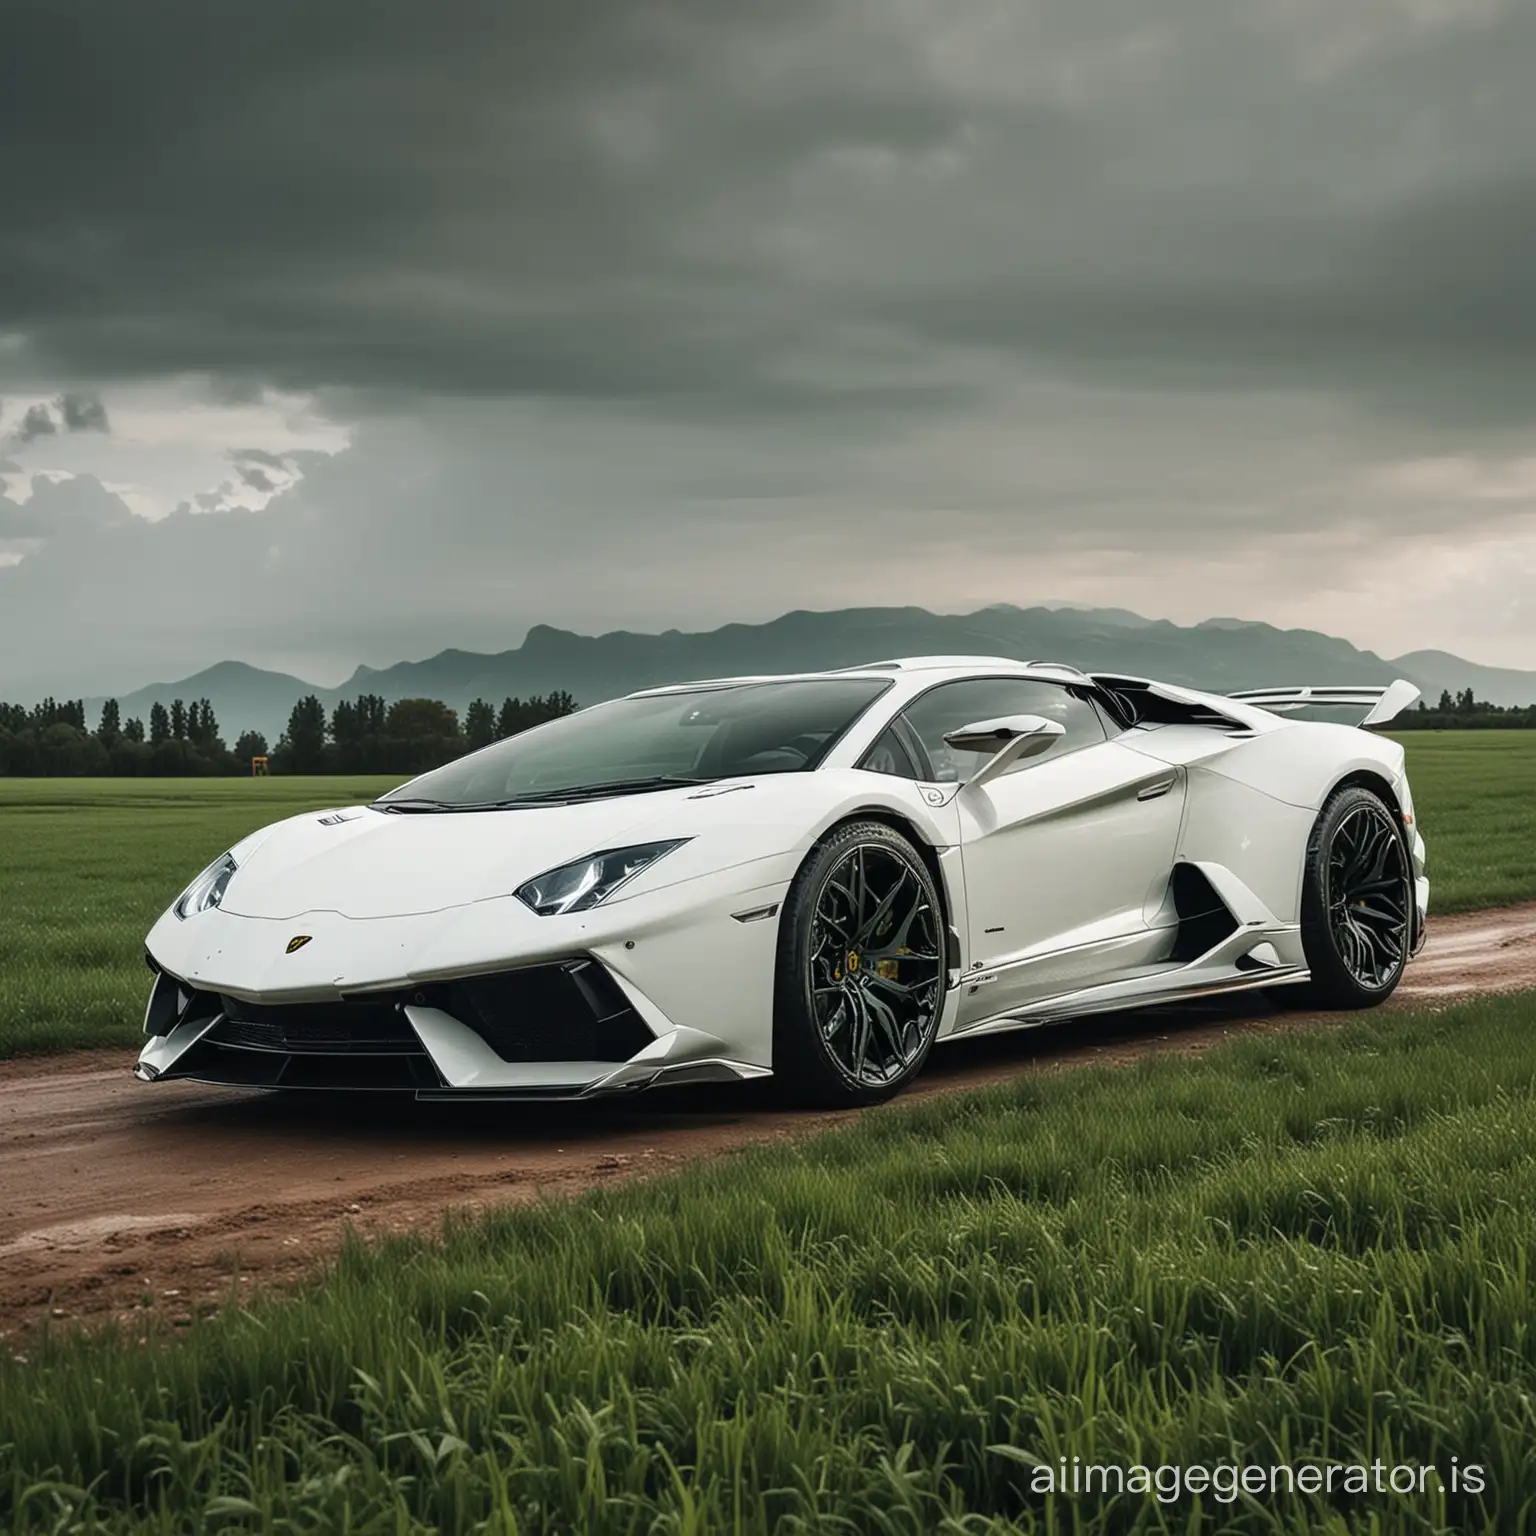 Futuristic-White-Lamborghini-Car-Speeding-Through-Lush-Green-Landscape